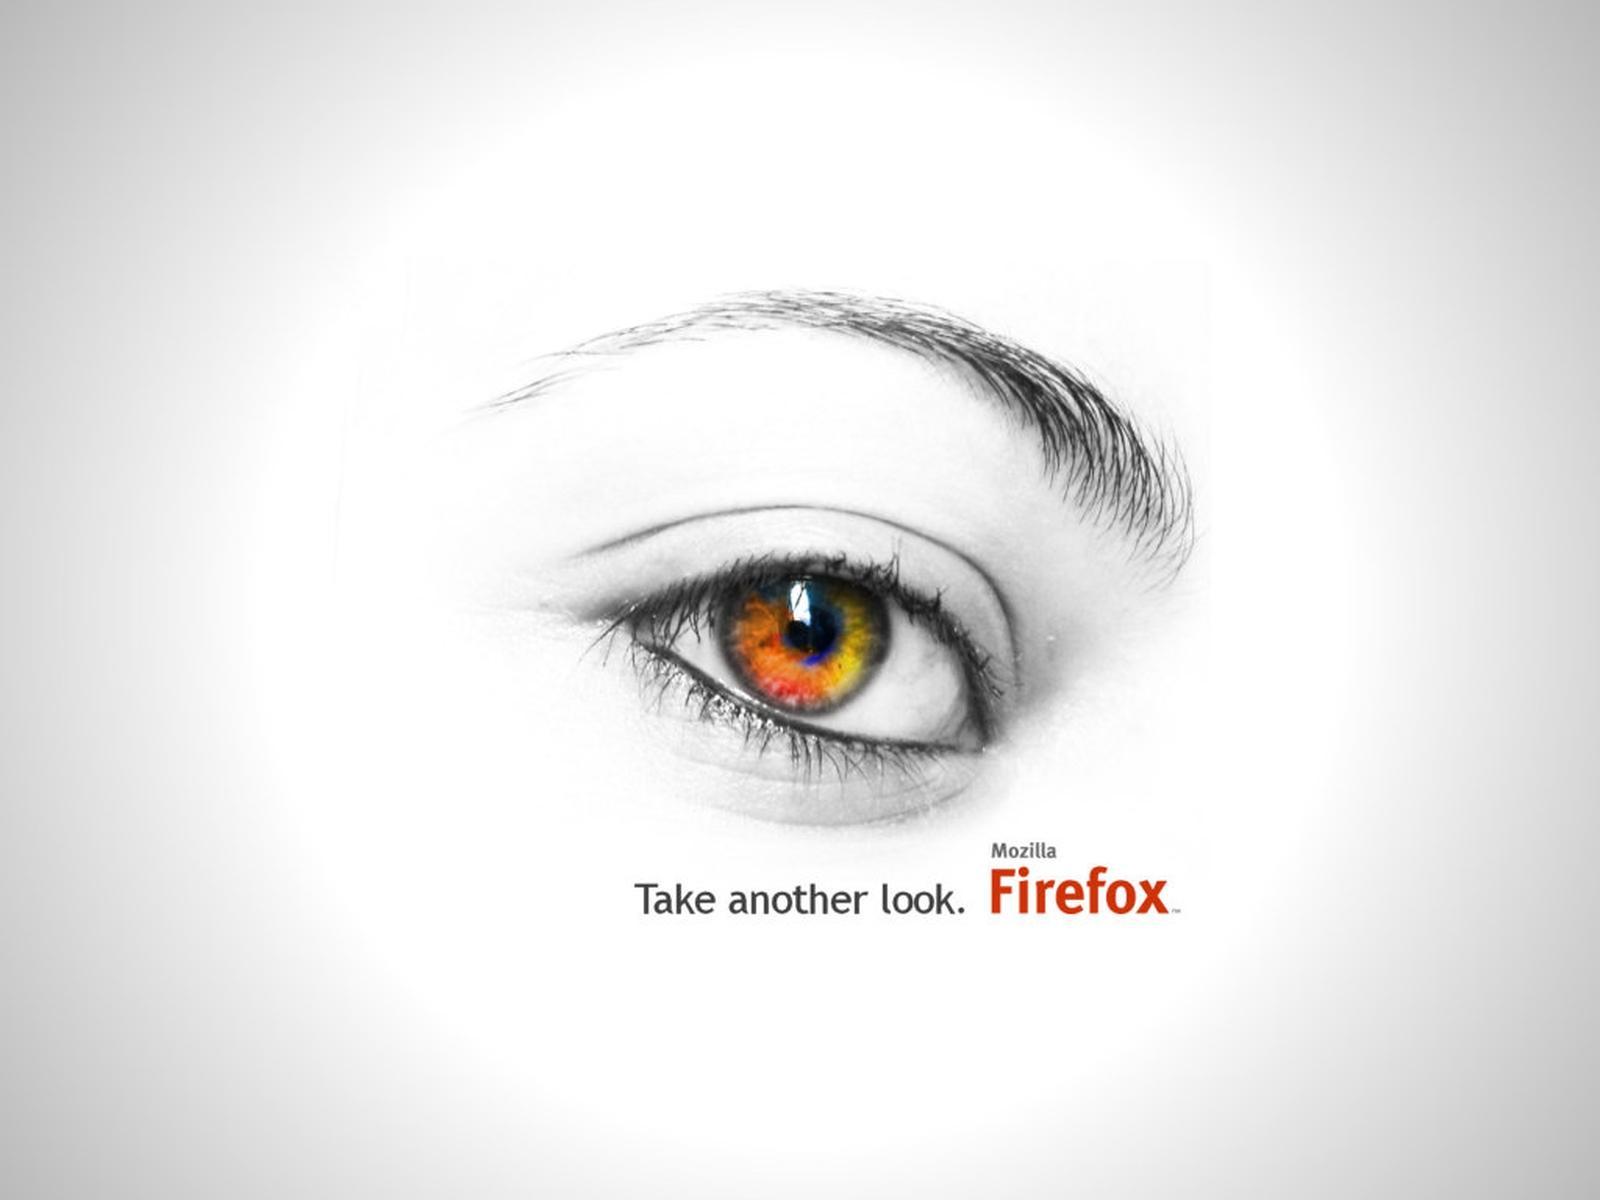 Firefox wallpaper free desktop background wallpaper image